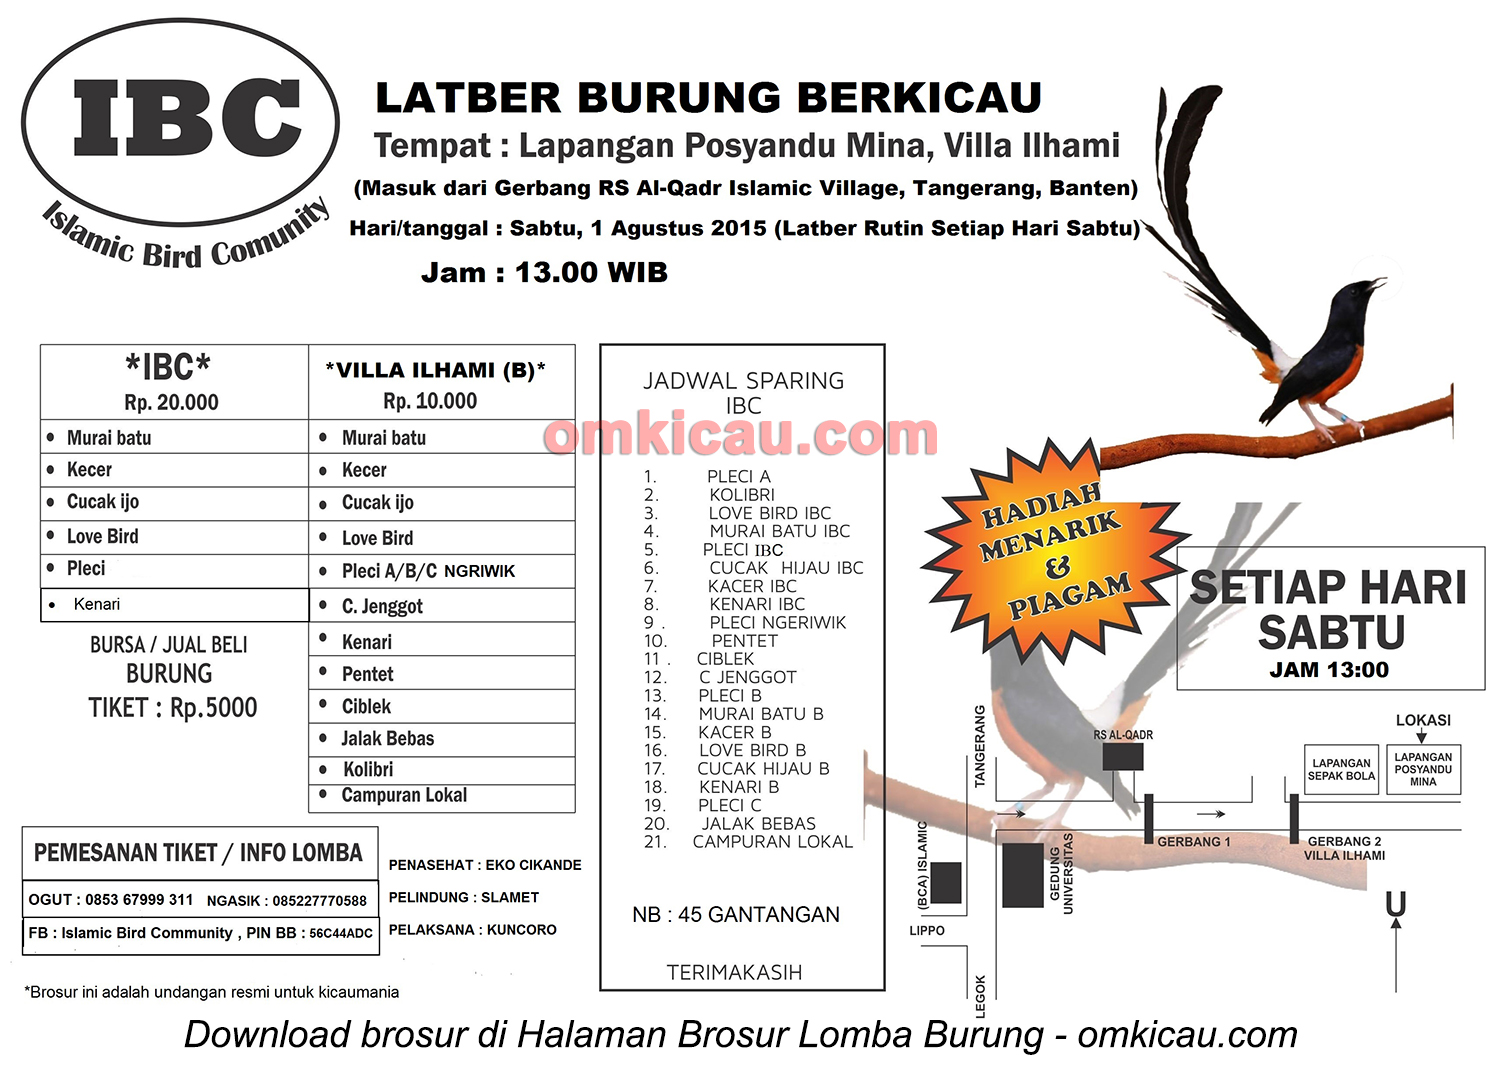 Brosur Latber Burung Berkicau IBC Tangerang setiap sabtu jam 1